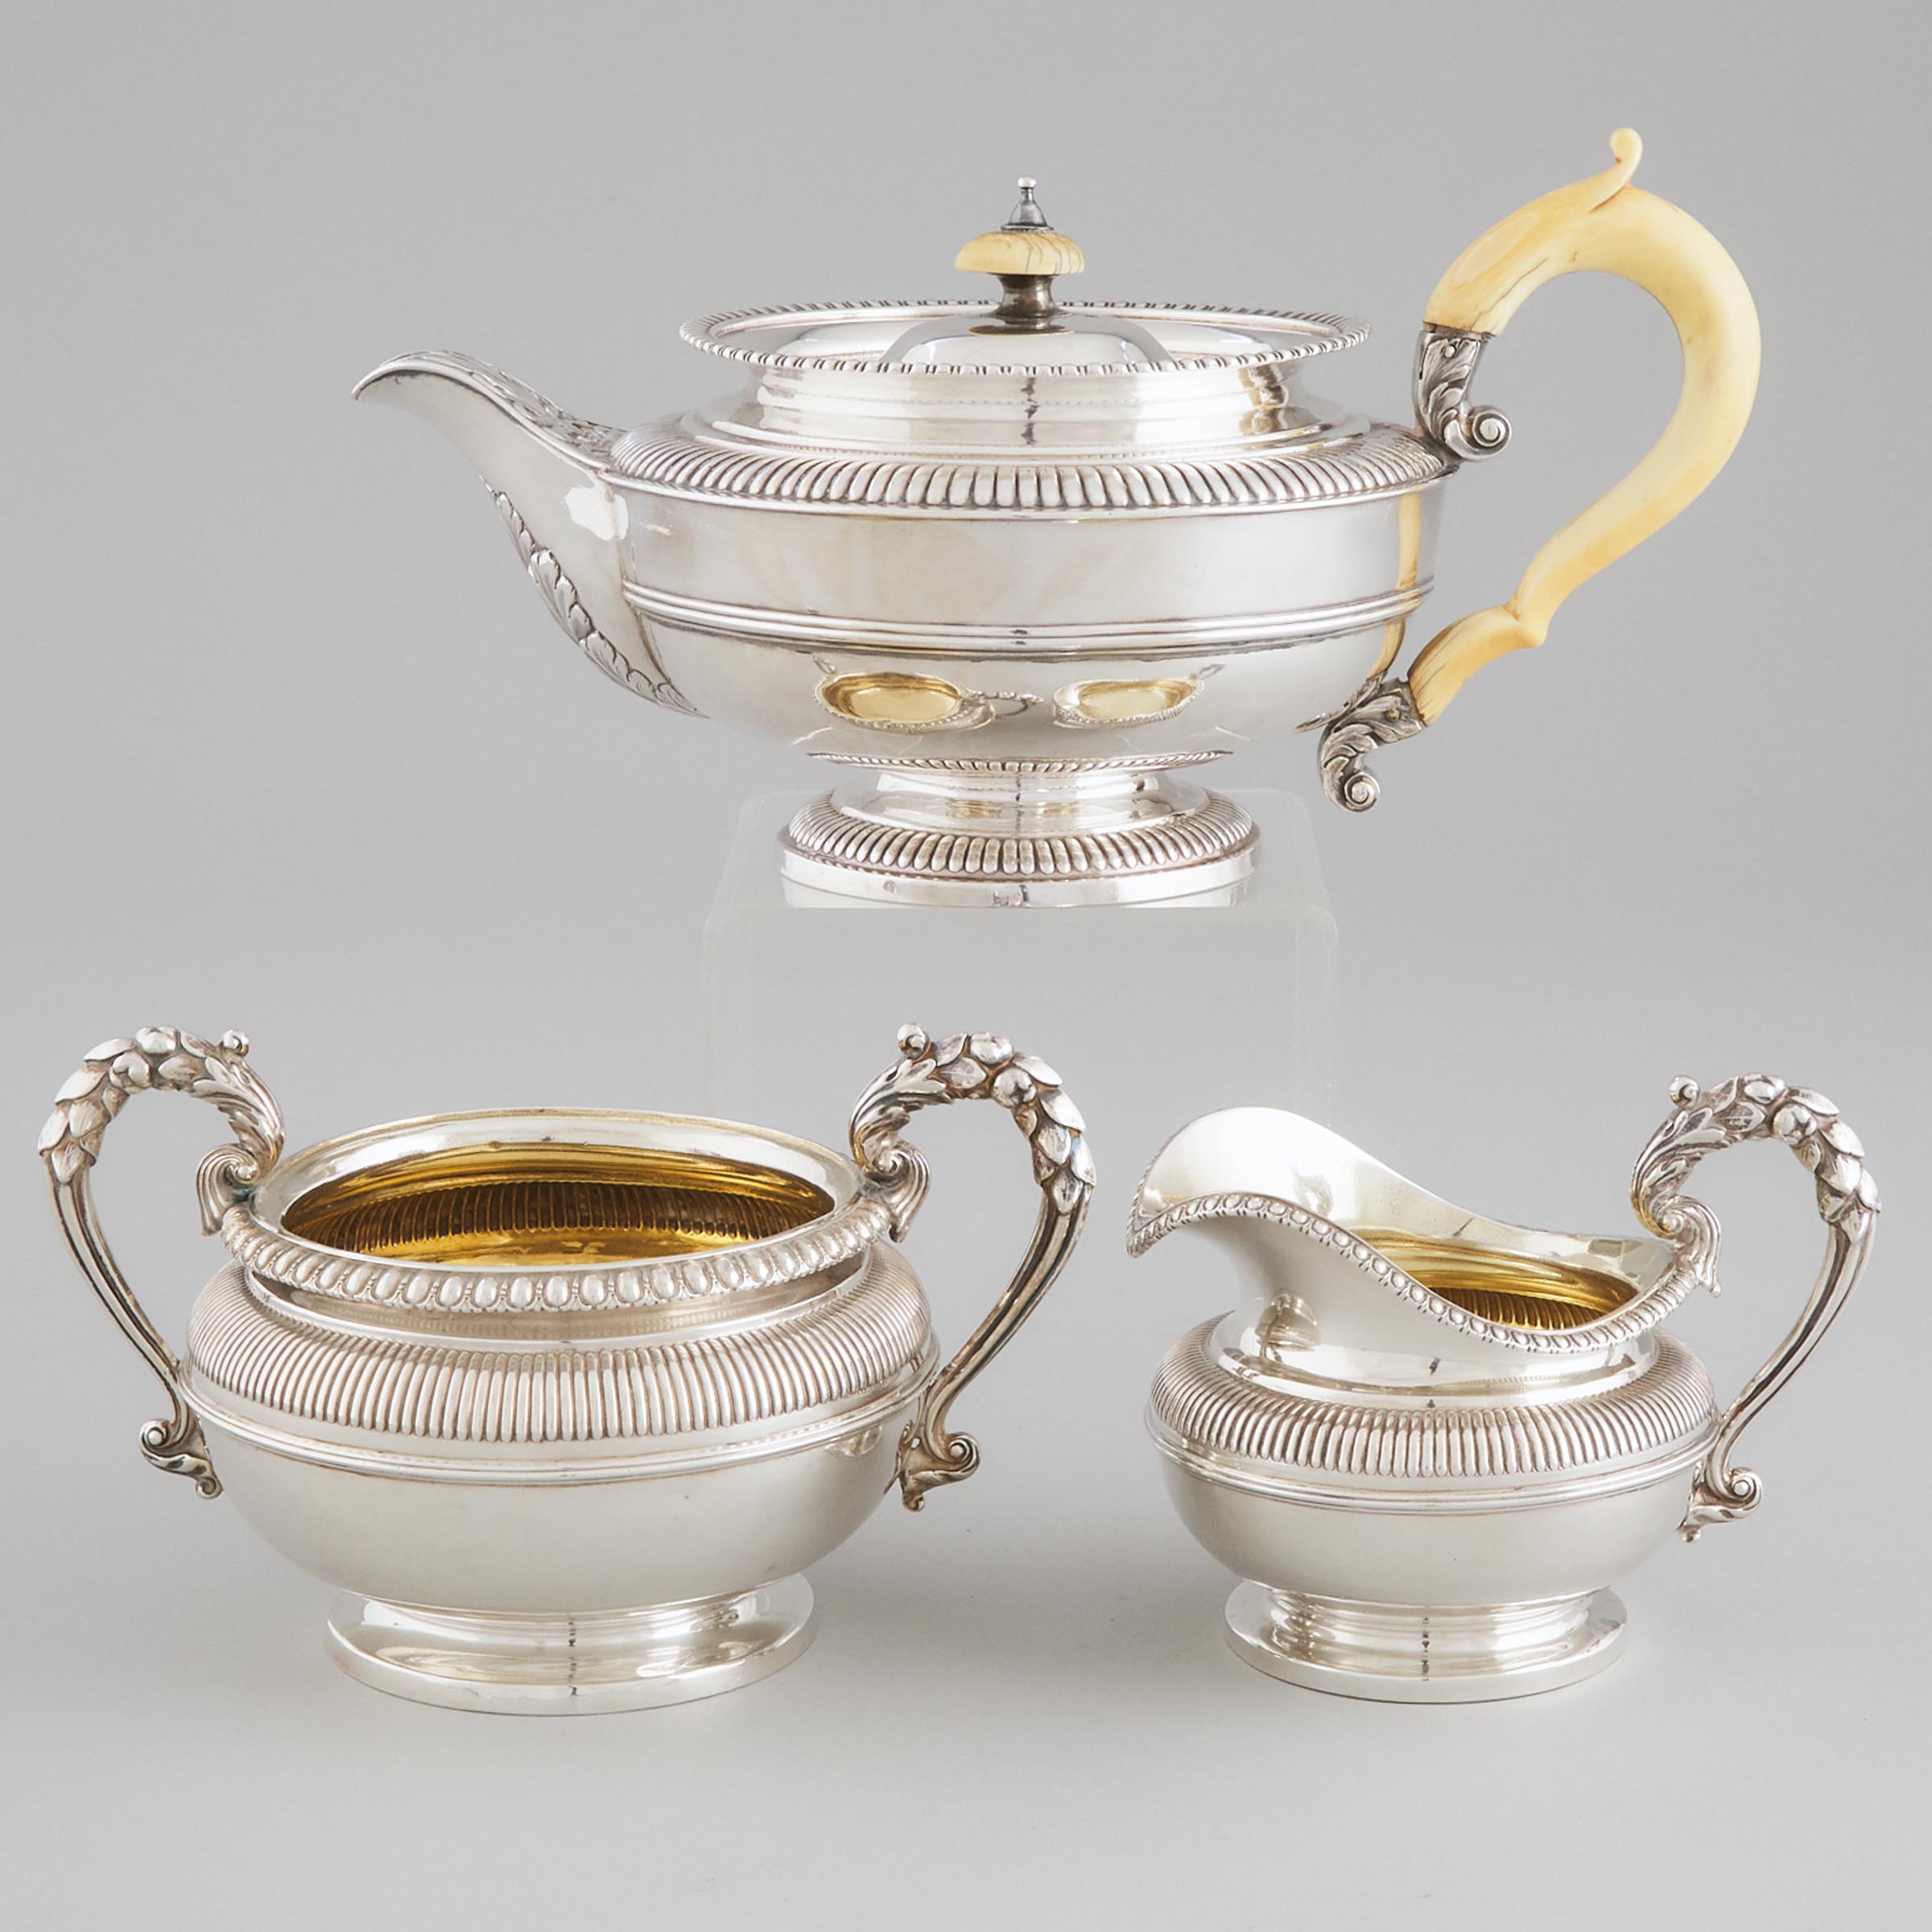 George IV Irish Silver Teapot, William Nolan for William Law, Dublin, 1825, and a Cream Jug and Sugar Basin, Benjamin Smith III, London, 1819